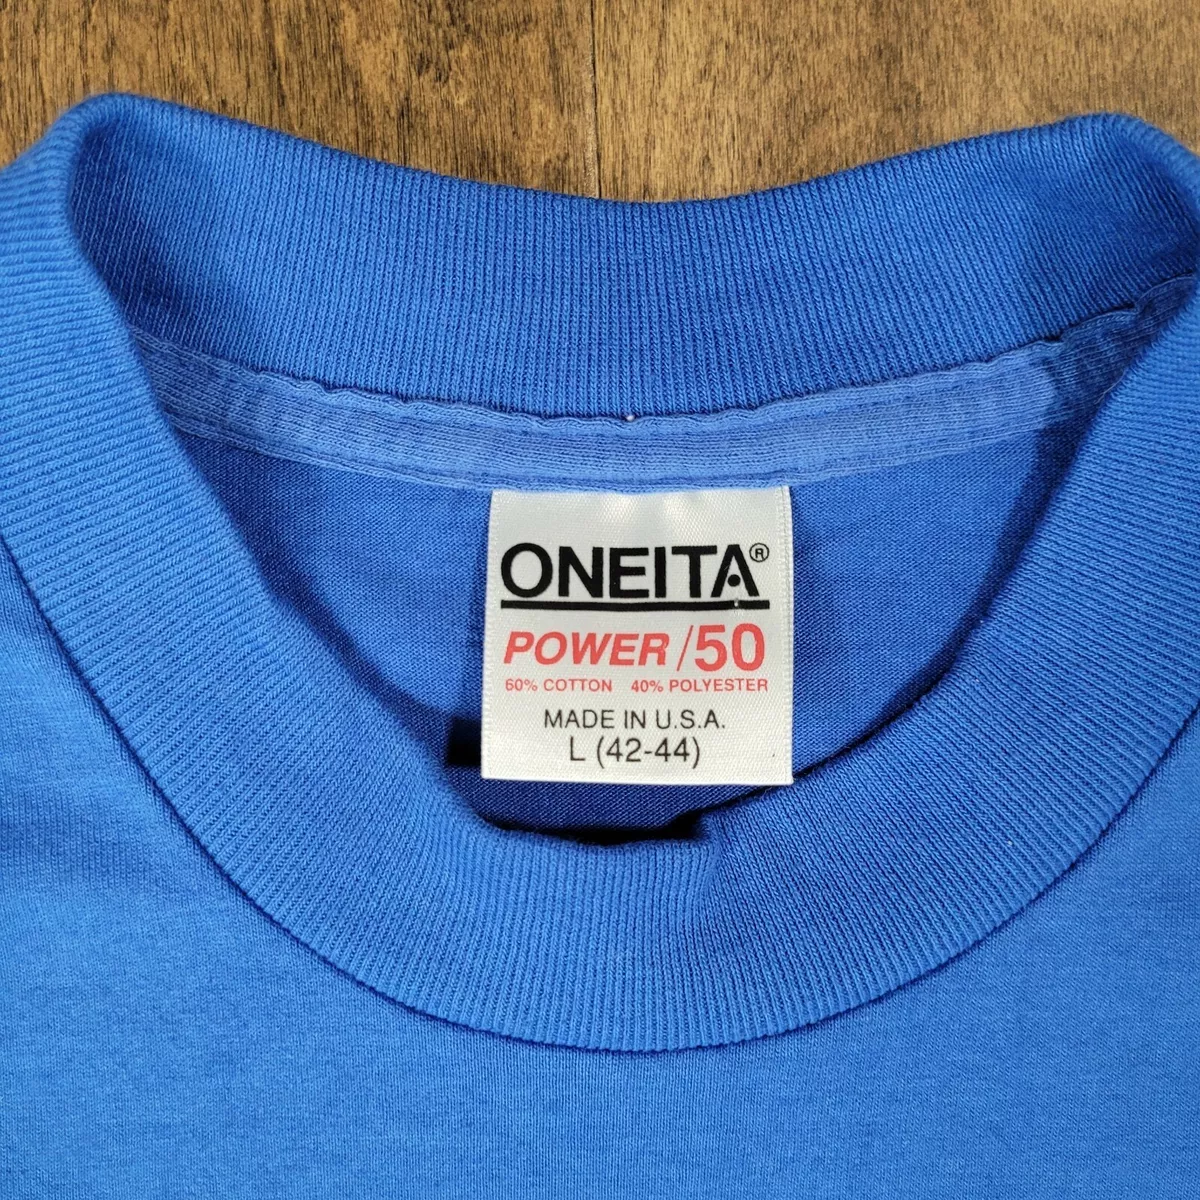 Oneita Power/50 Single Stitch Blue T-Shirt Men Large 60/40 Made in USA